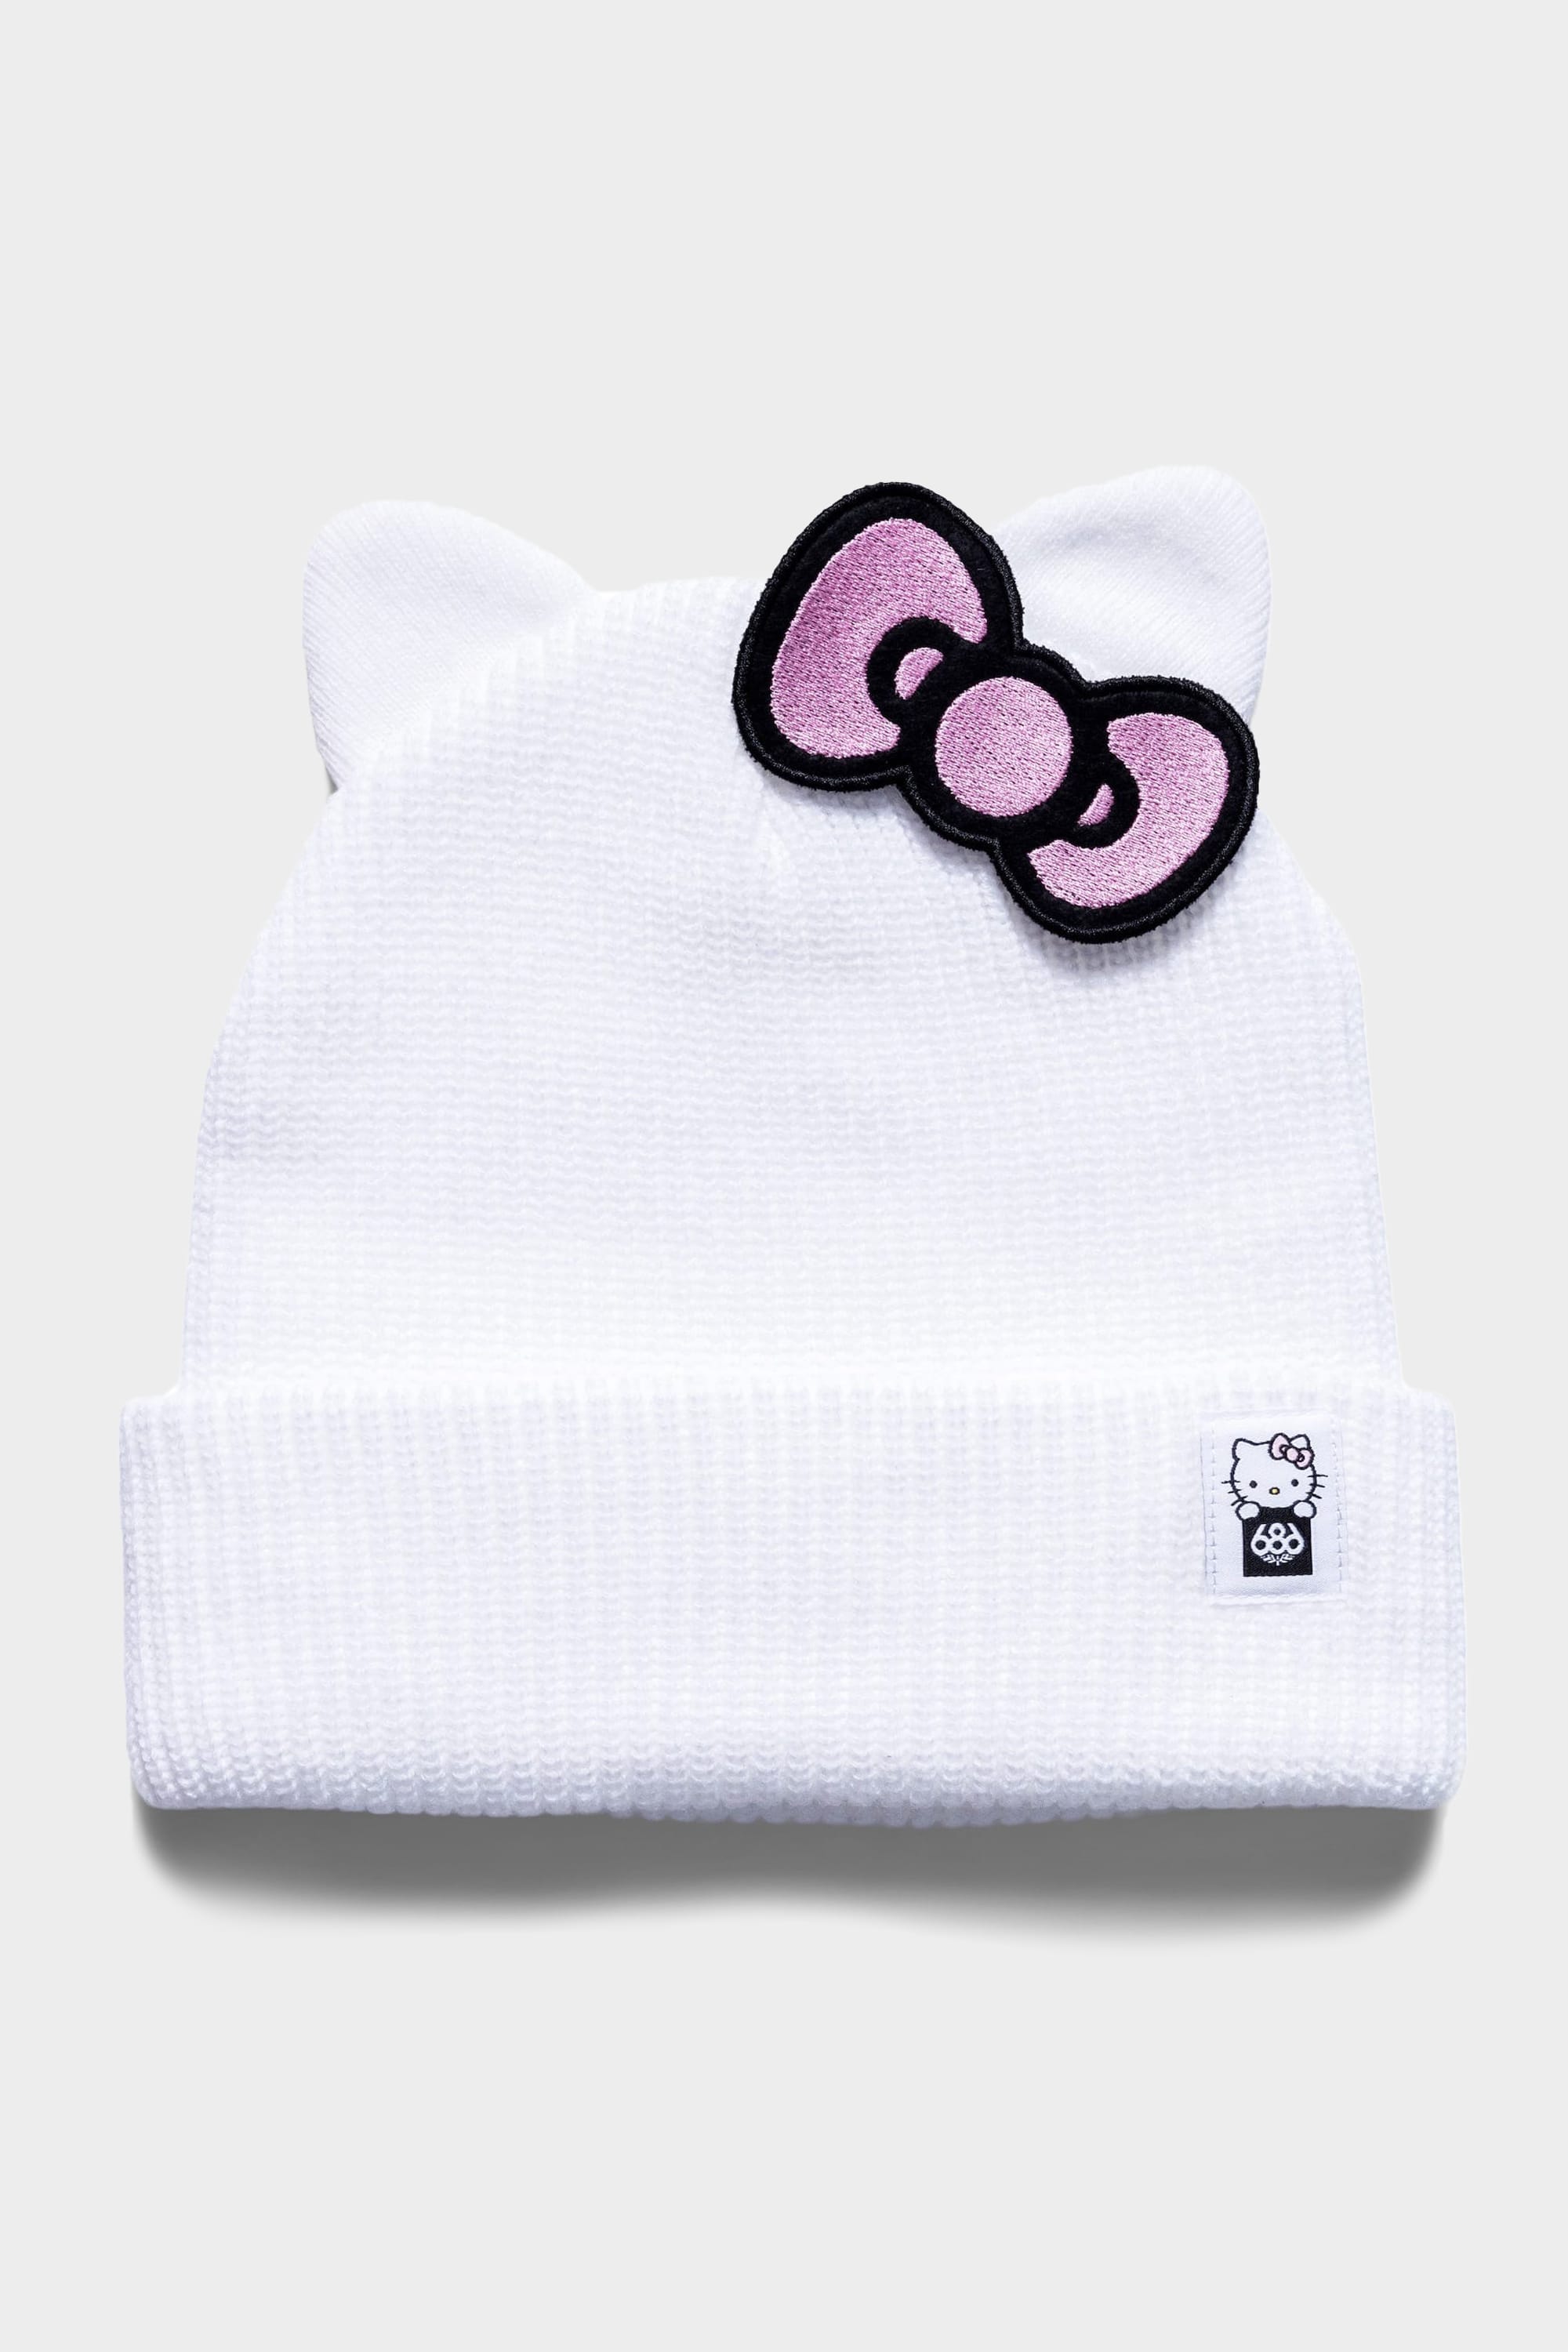 Hello Kitty Hooded Warm Jacket - Pink Zone